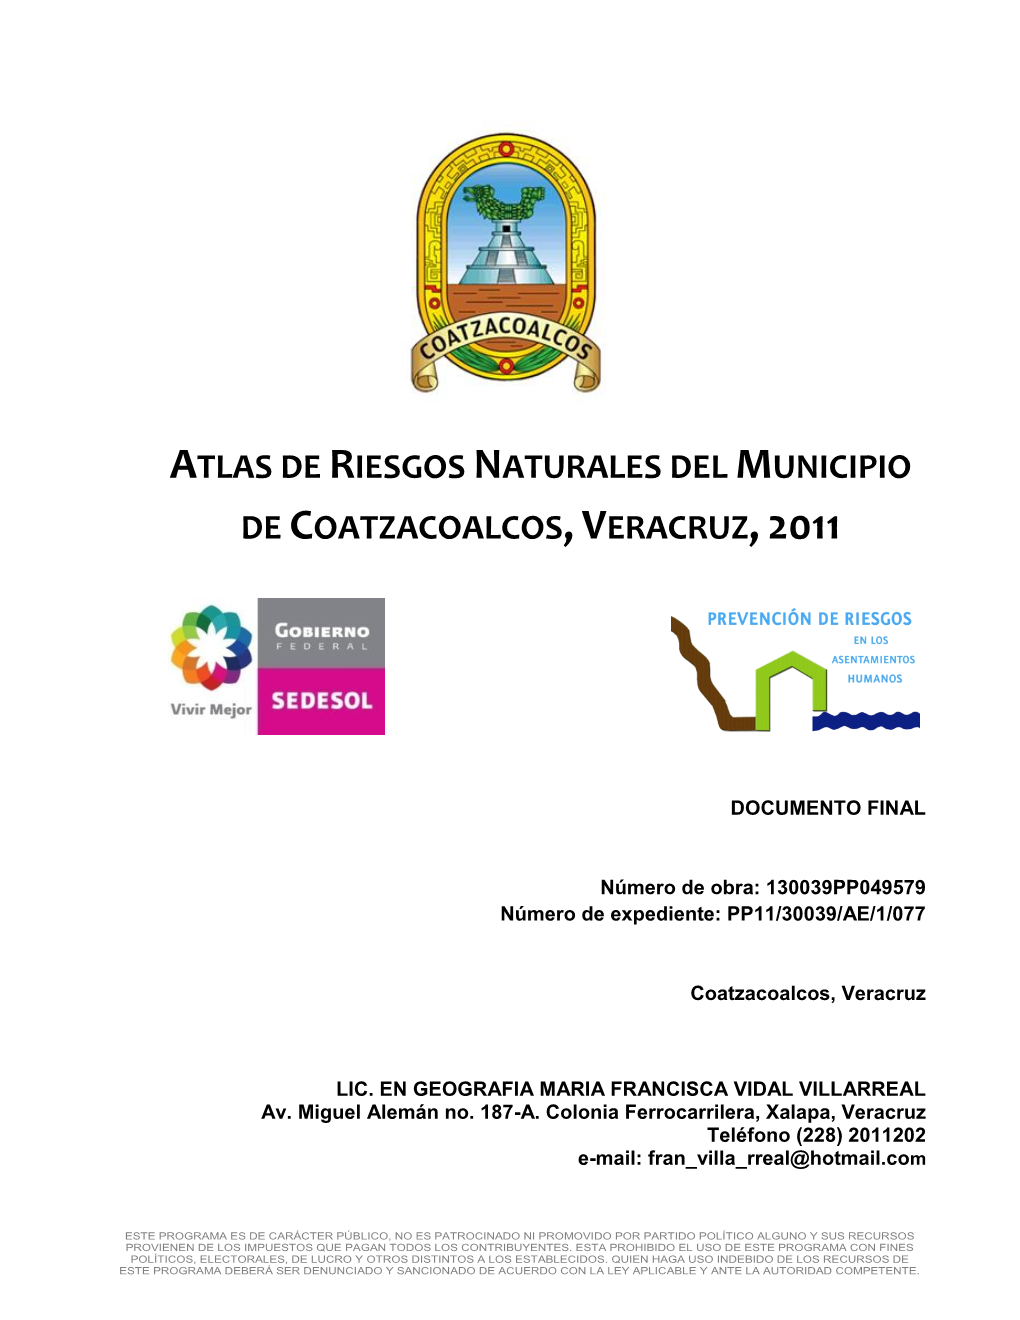 Atlas De Riesgos Naturales Del Municipio De Coatzacoalcos,Veracruz,2011